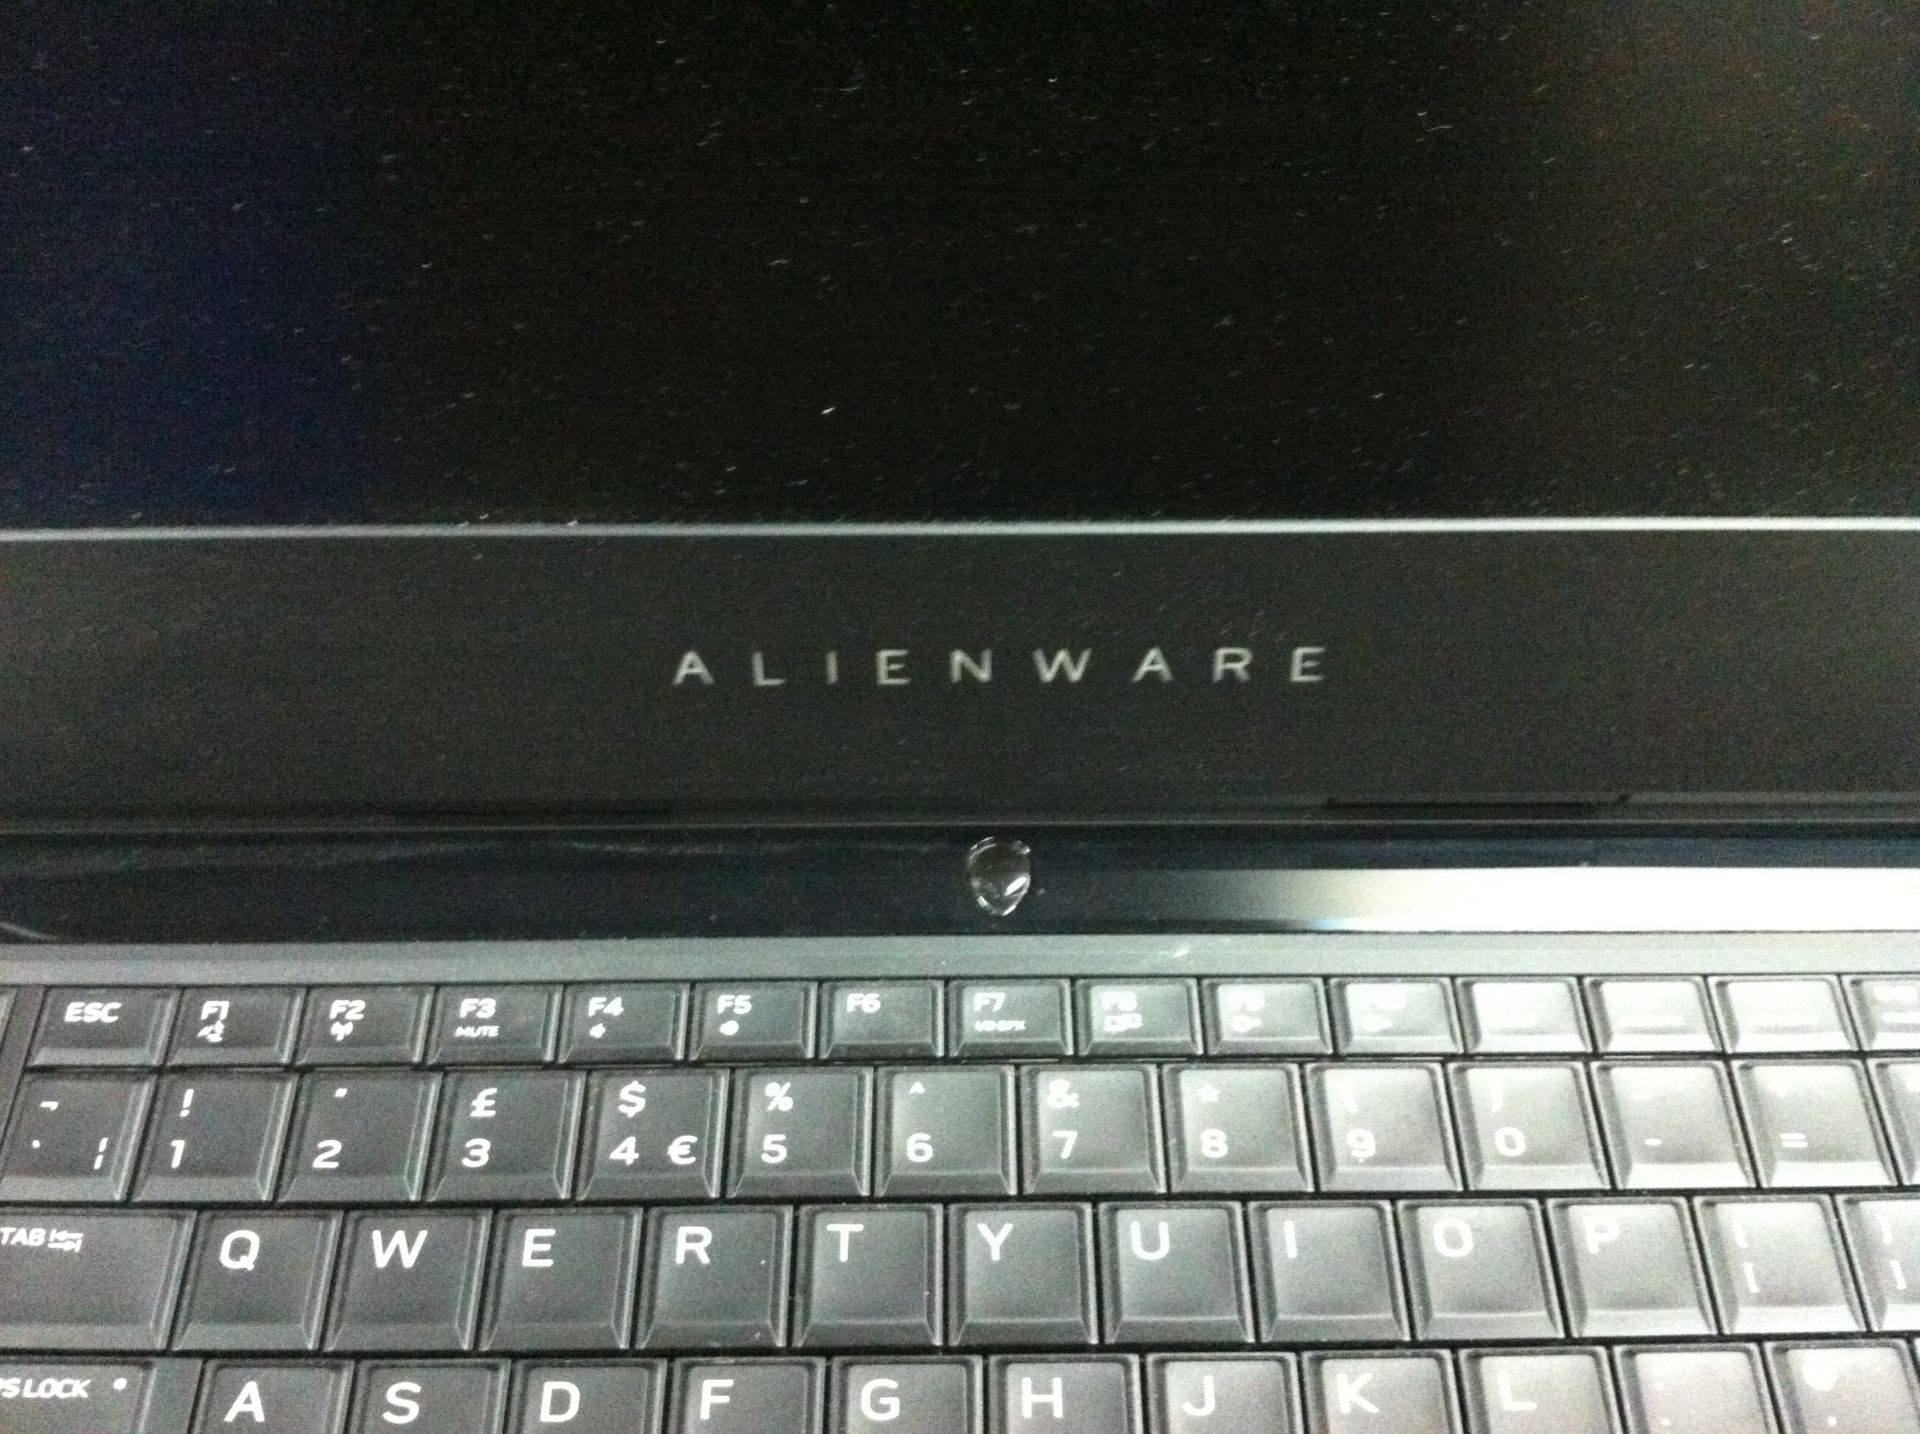 Alienware Core i5 7th Gen Laptop - Image 3 of 4